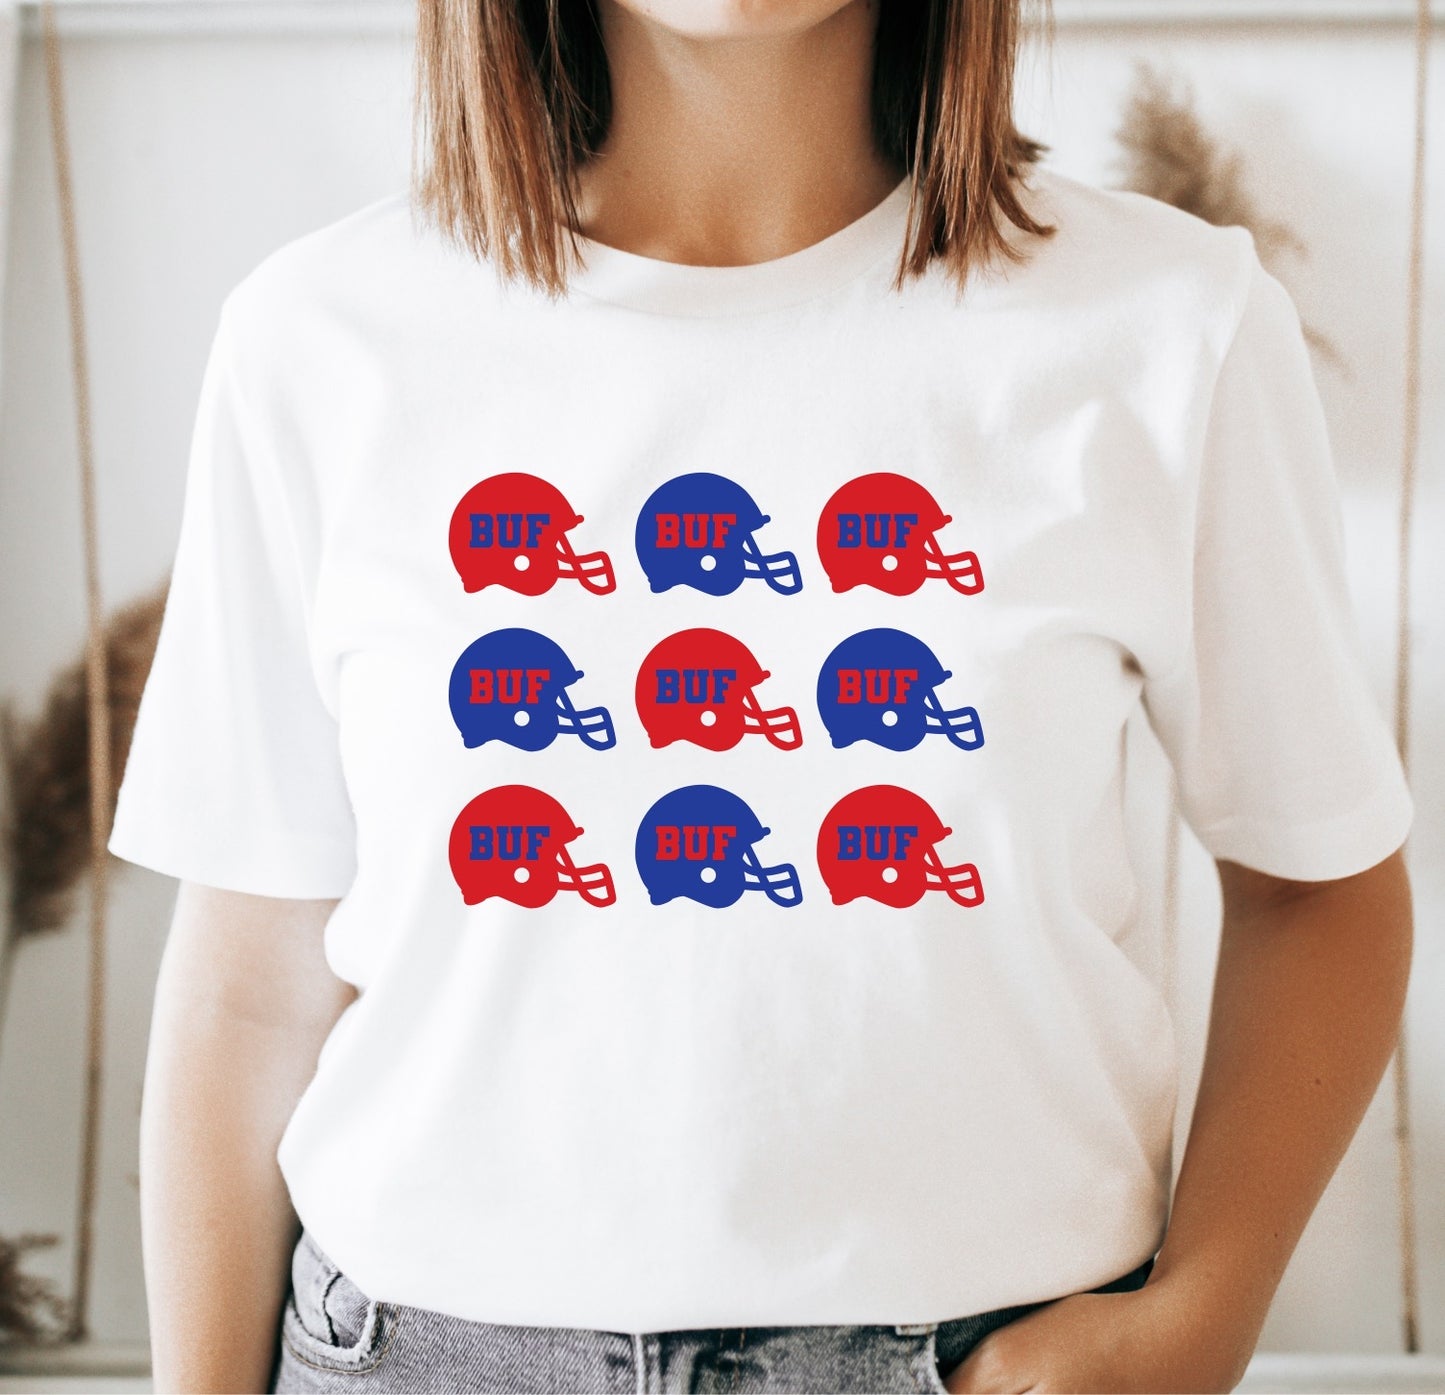 Buffalo helmet tee, Buffalo t-shirt, Buffalo shirt, Buffalo vintage inspired t-shirt